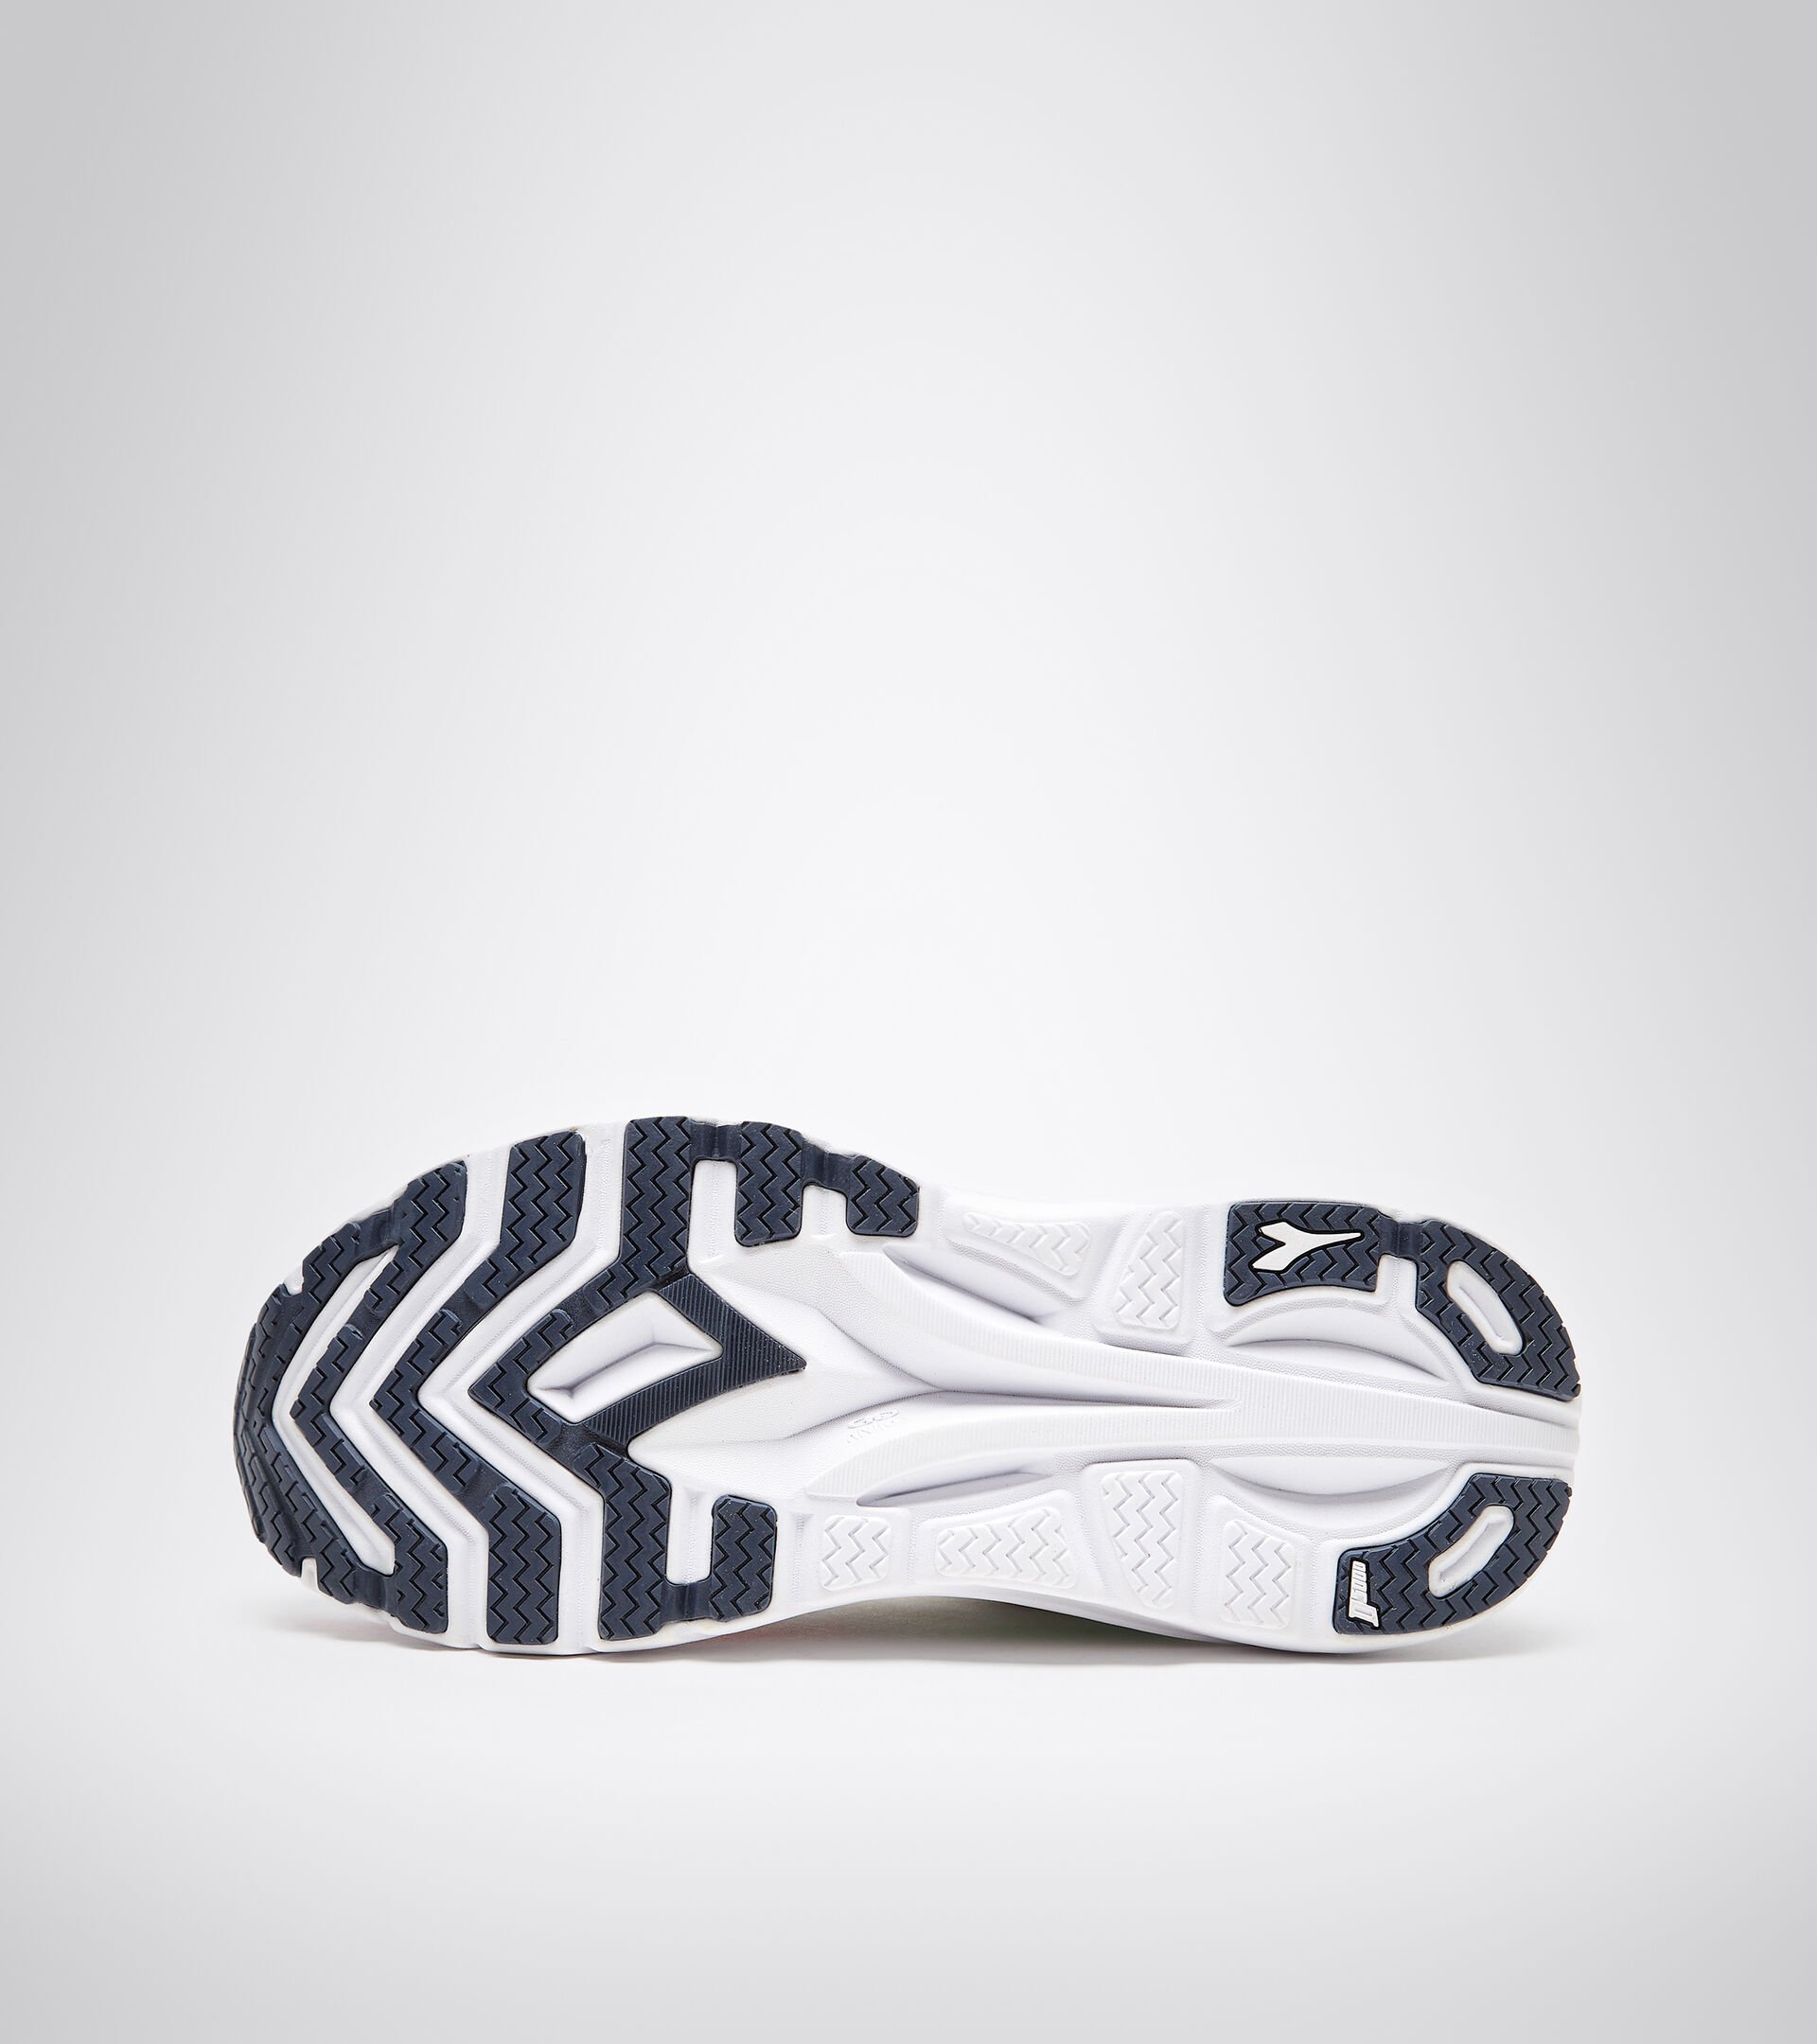 Made in Italy - Running shoes - Women EQUIPE ATOMO W WHITE/GOLD - Diadora